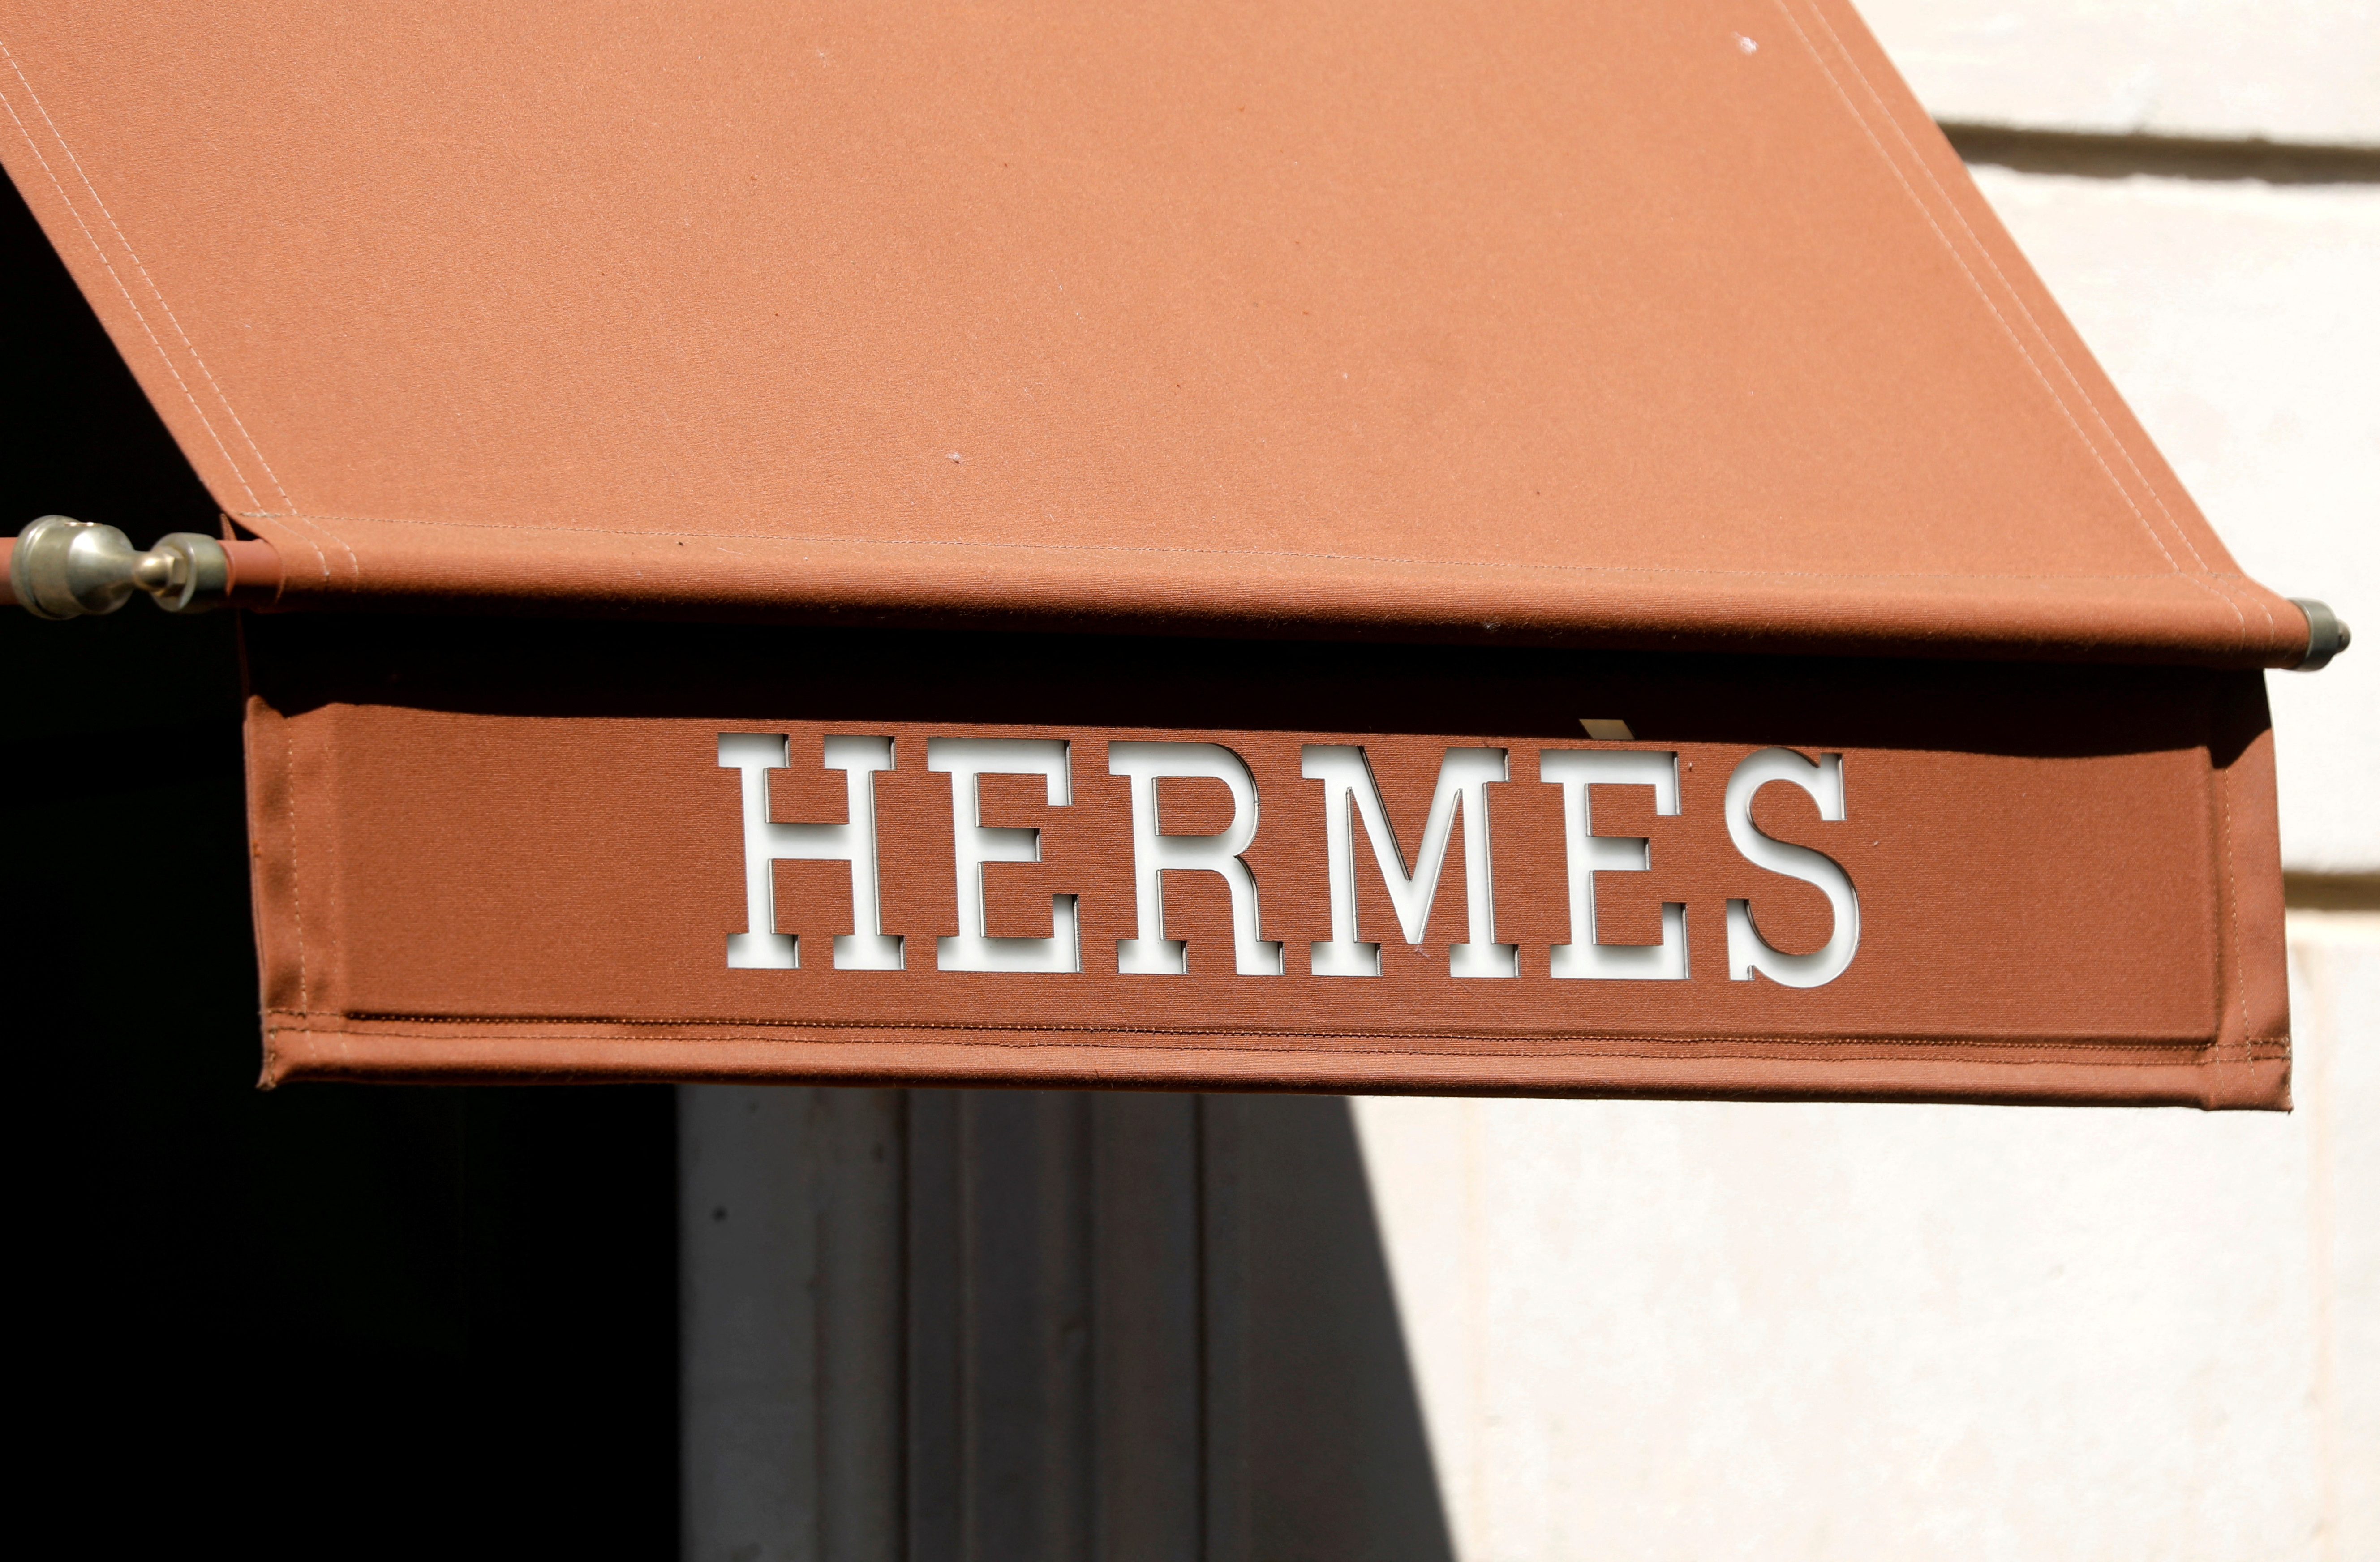 Hermès sales rise as shoppers splurge on Birkins